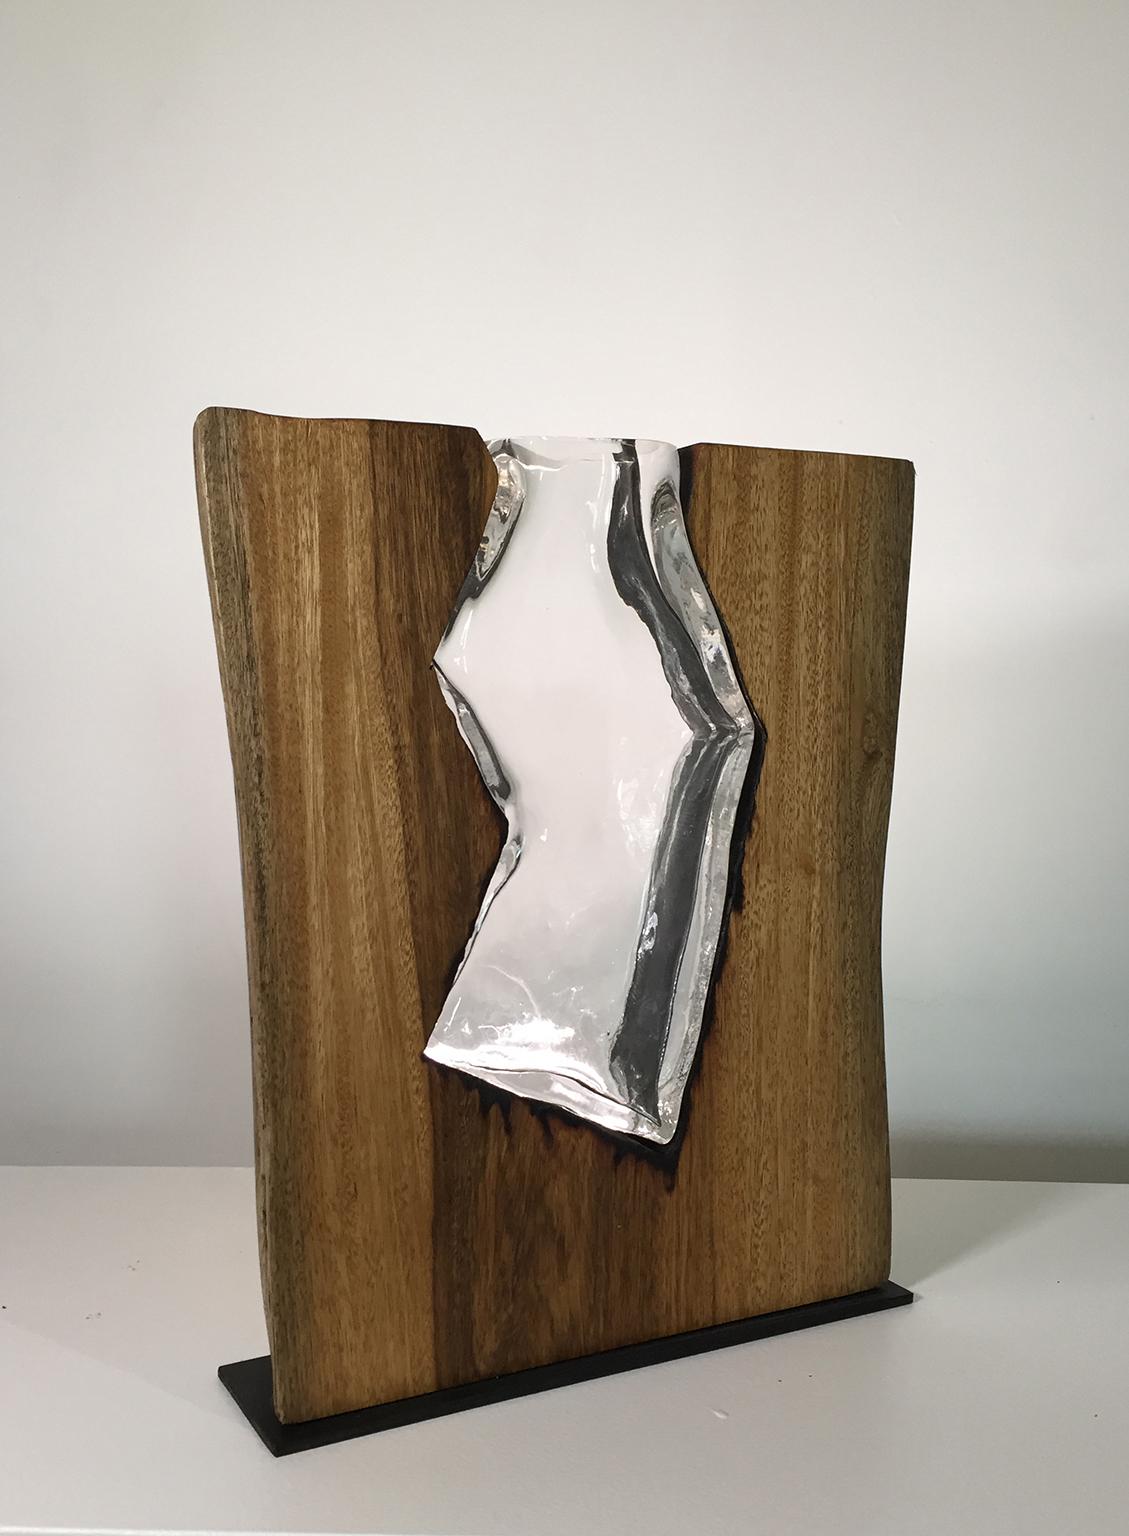 Hand Blown Clear Glass with Live Edge Wood, Vase Sculpture Scott Slagerman - Mixed Media Art by Scott Slagerman / Jim Fishman